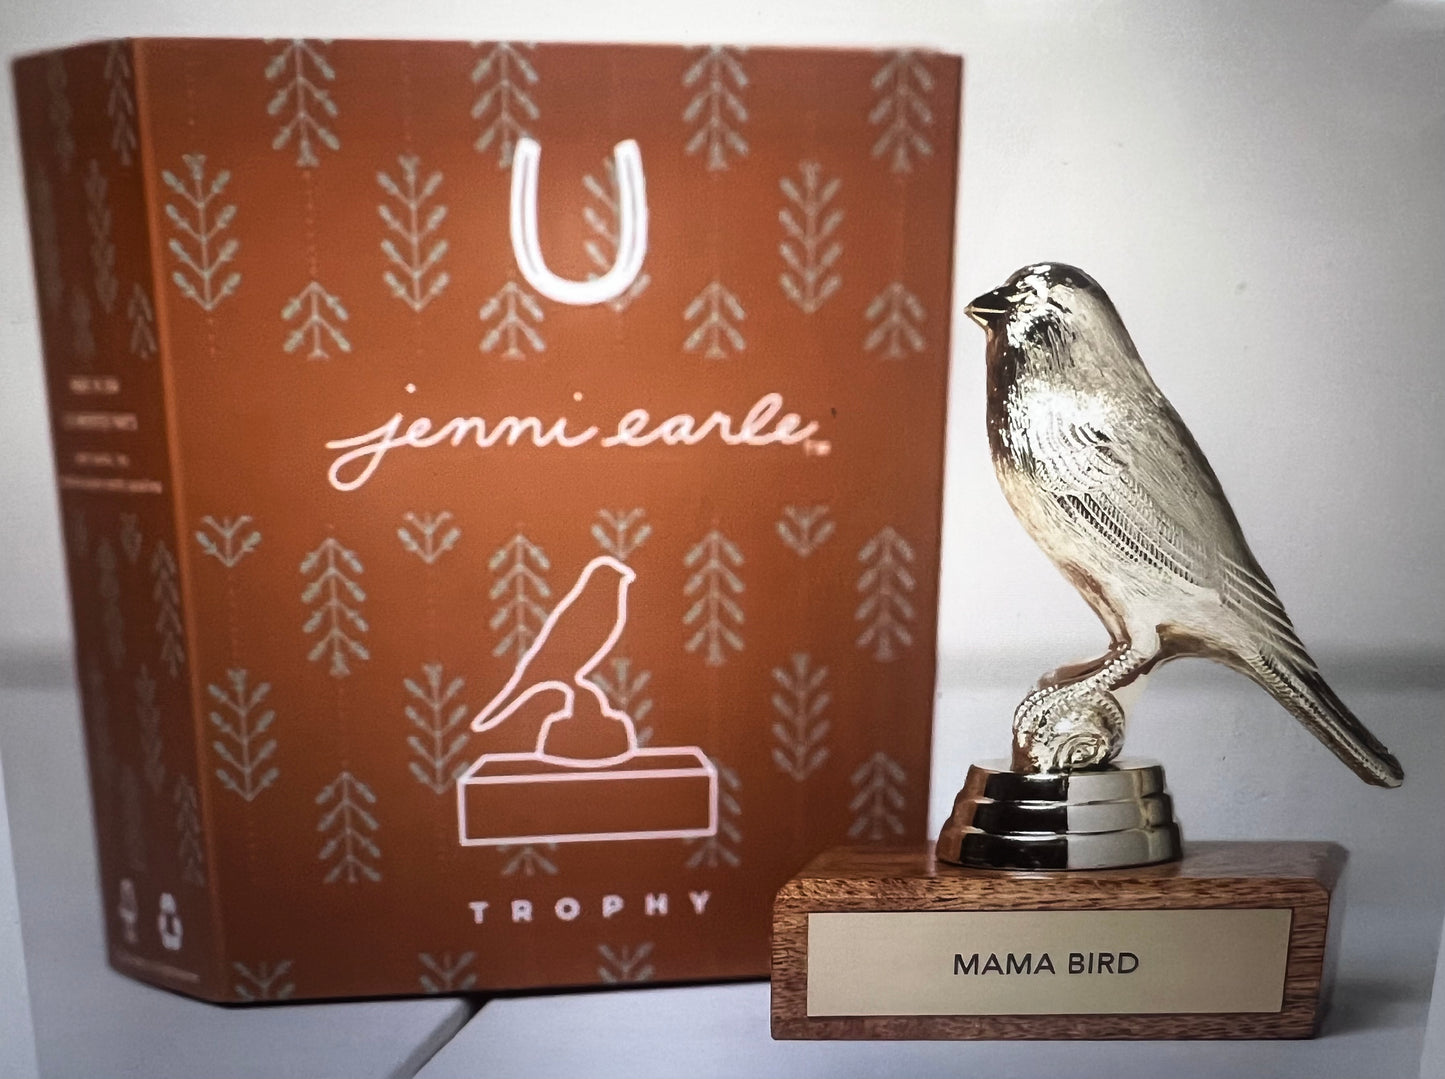 “Mama Bird” trophy